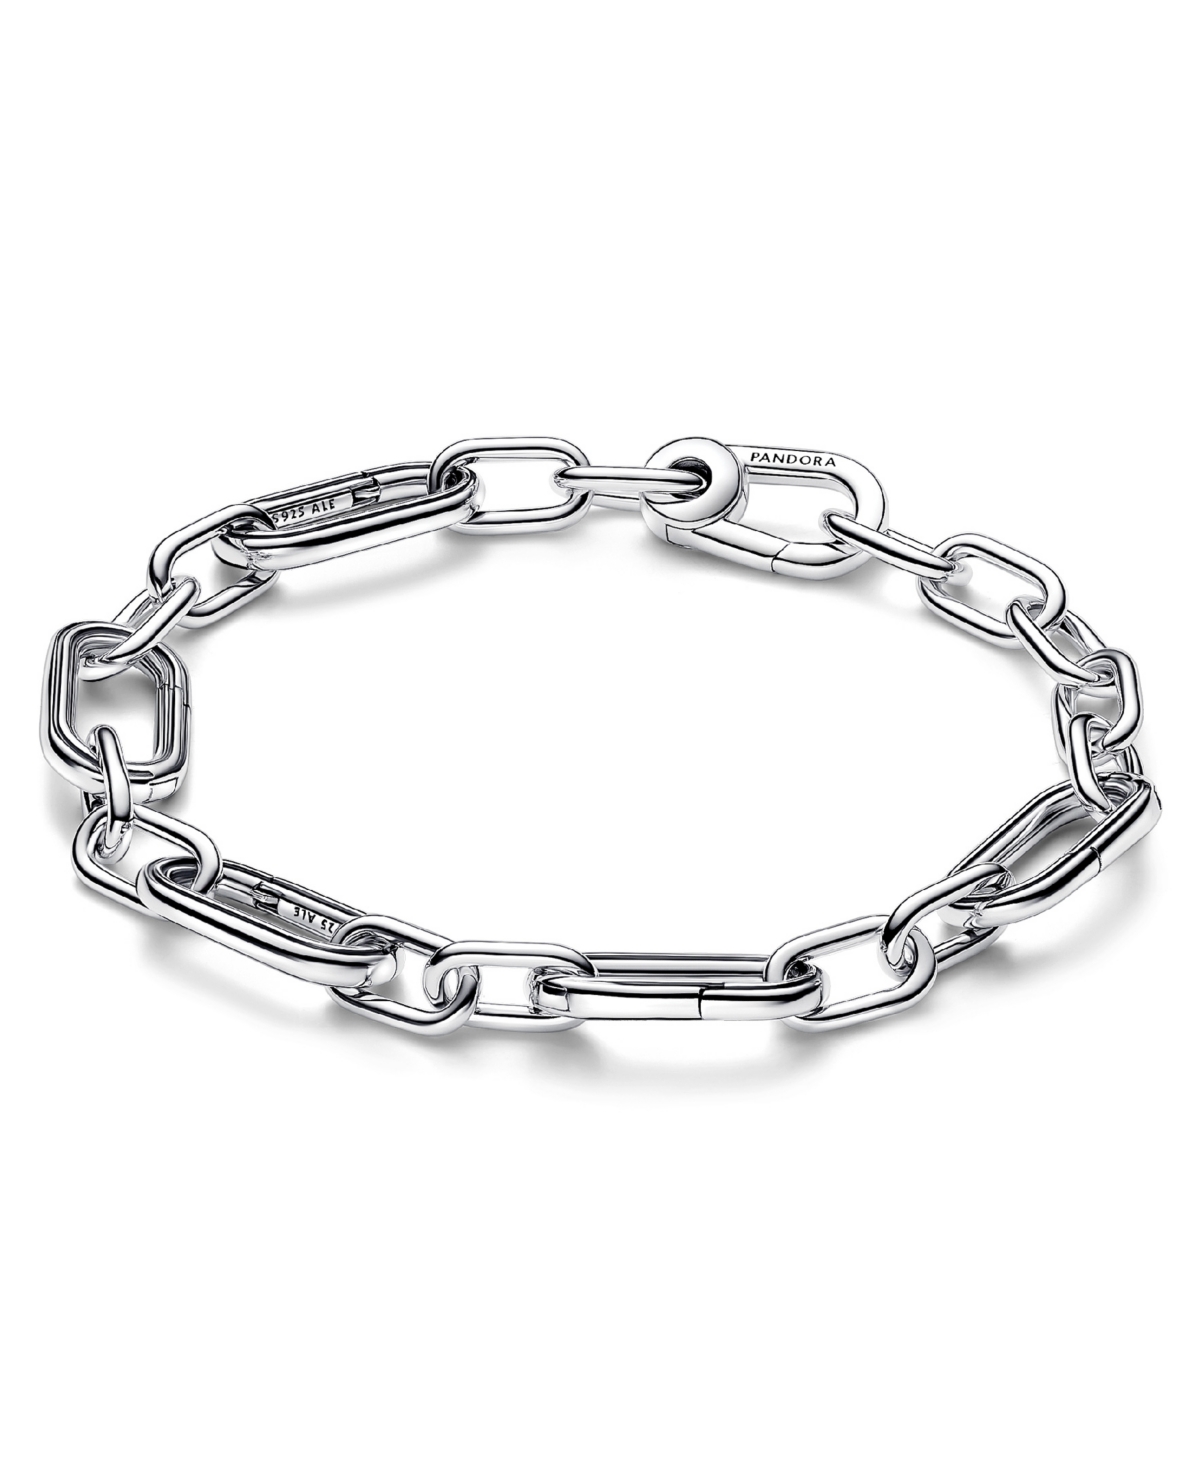 Shop Pandora In Sterling Silver Five Openable Link Chain Bracelet